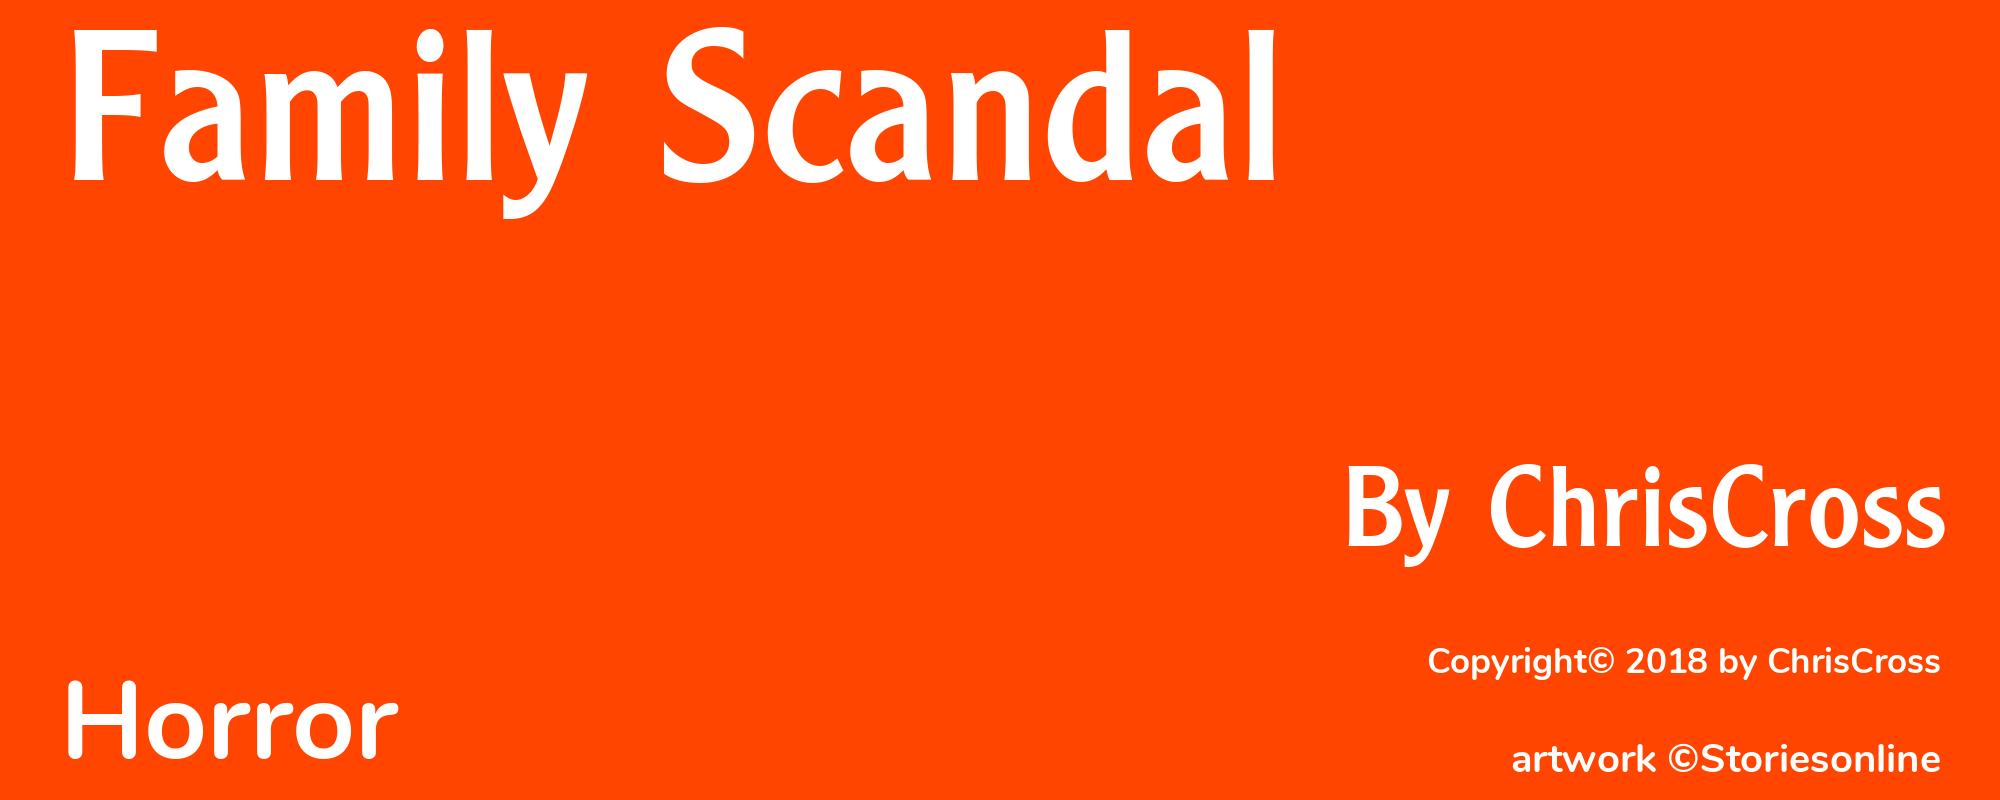 Family Scandal - Cover